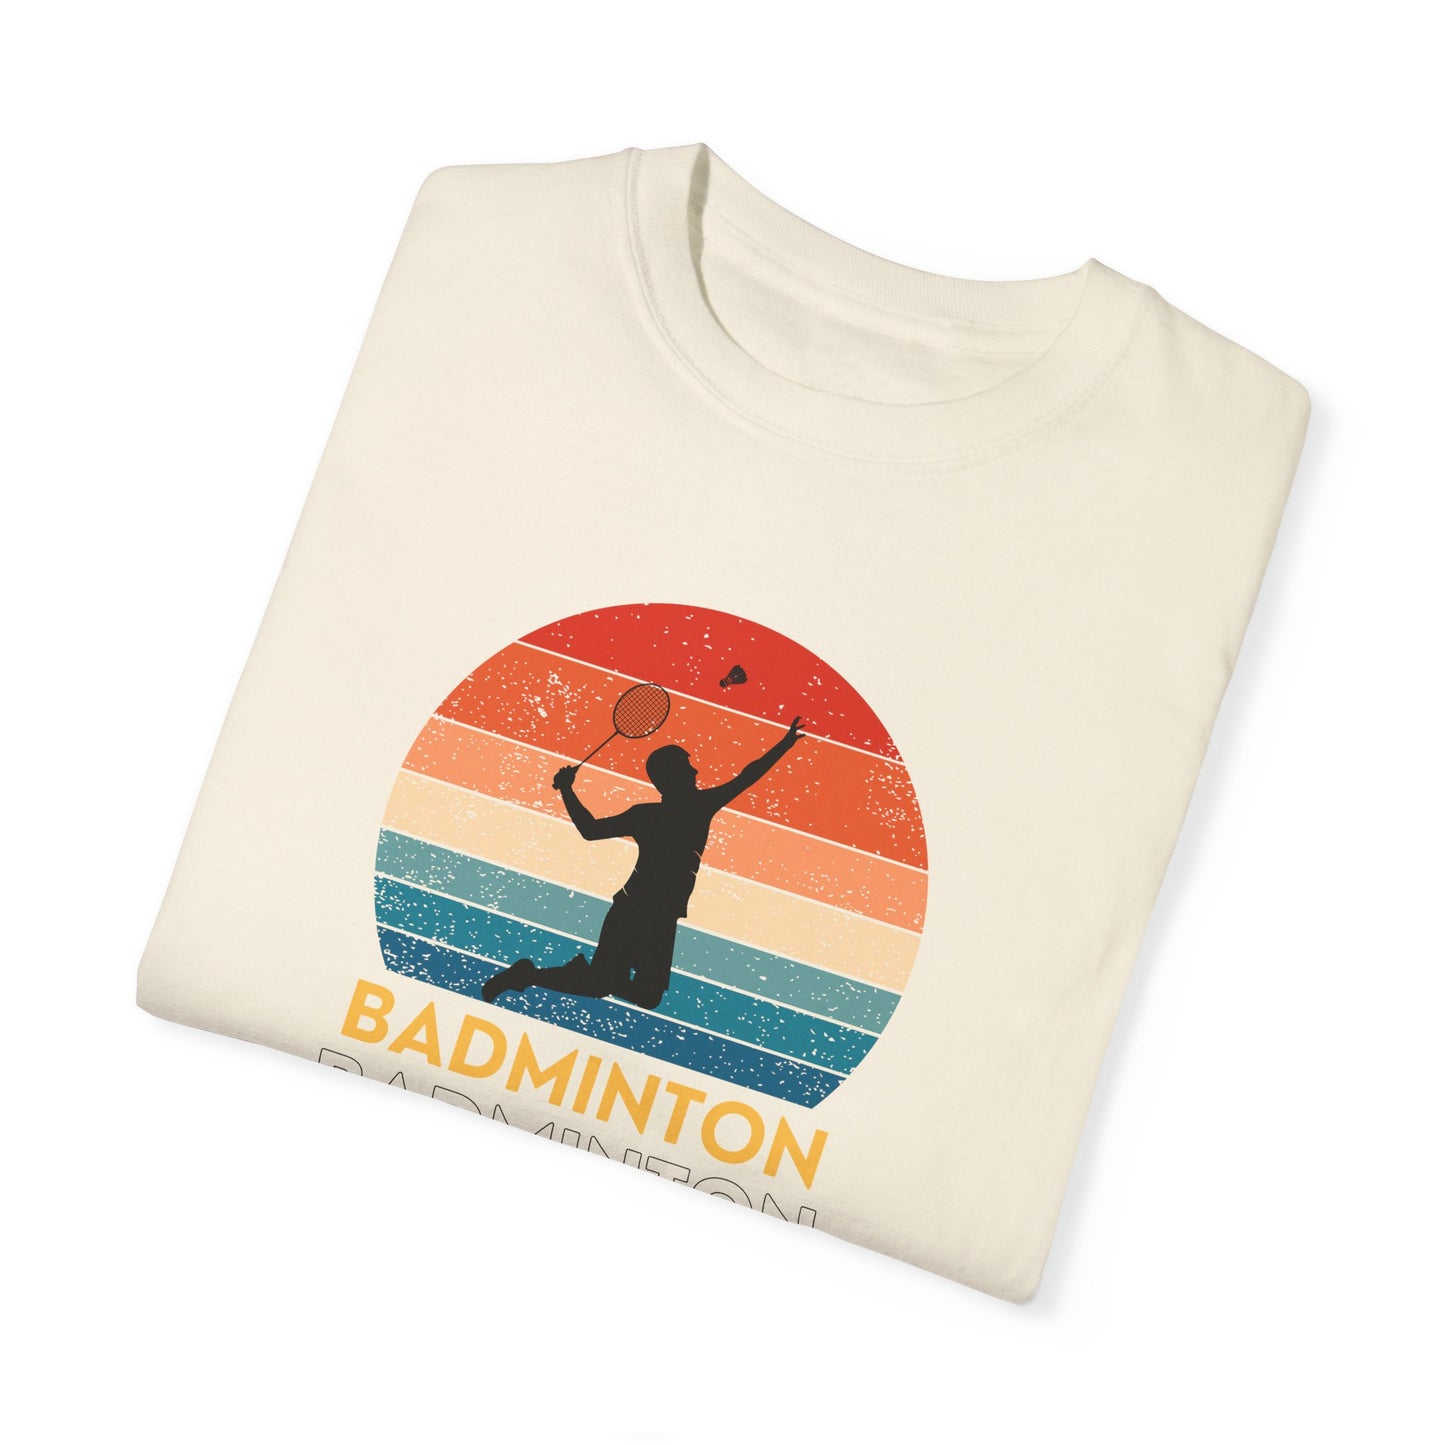 Retro Sunshine Badminton Shirt